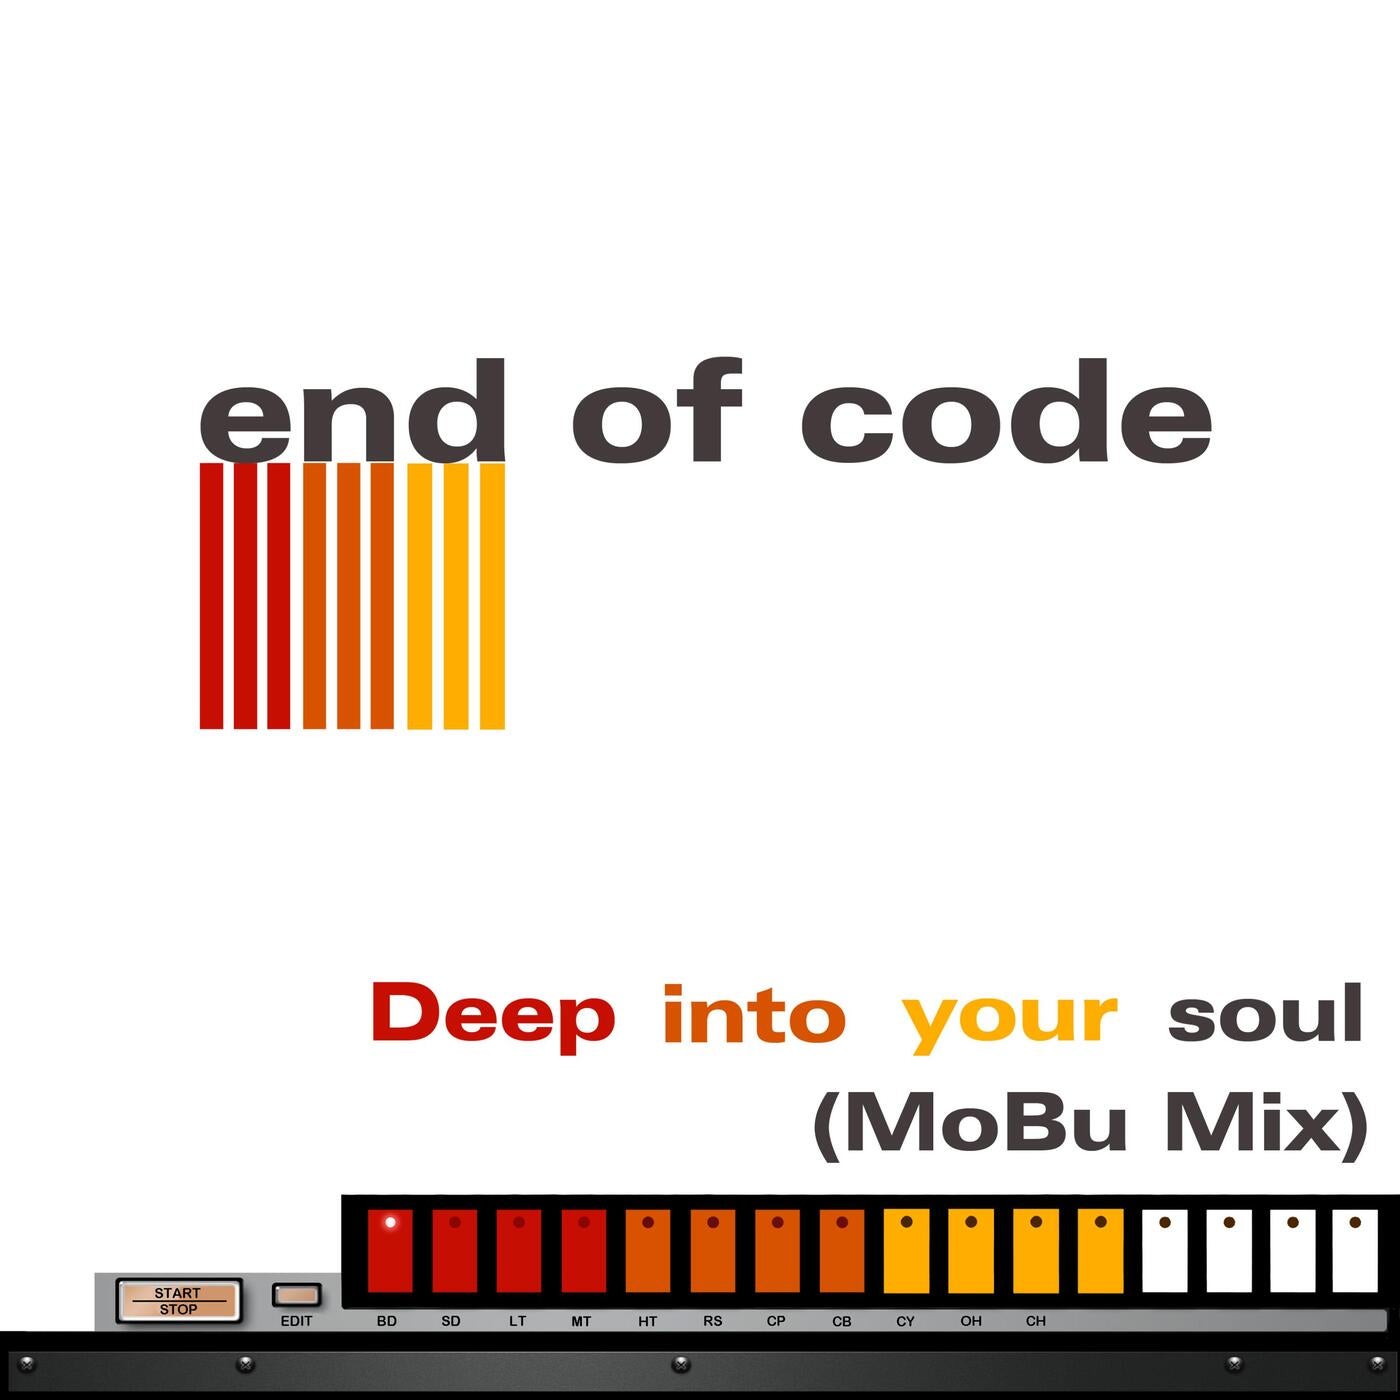 Deep into your soul (MoBu Mix)